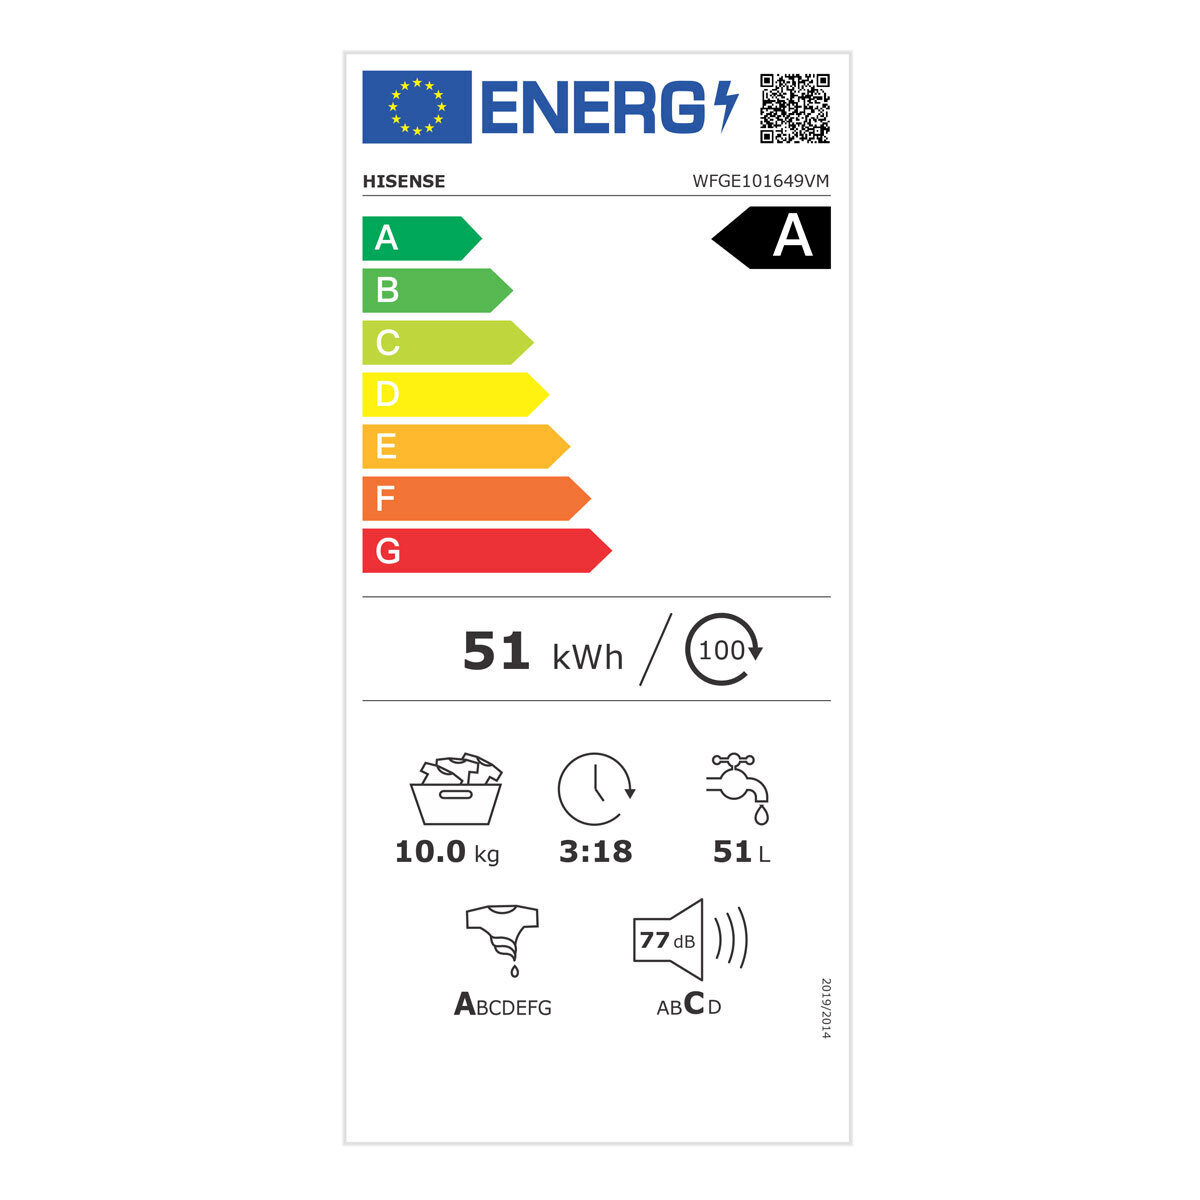 Energy Label for Hisense 10kg Washing Machine WFGE101649VM @ www.costco.co.uk